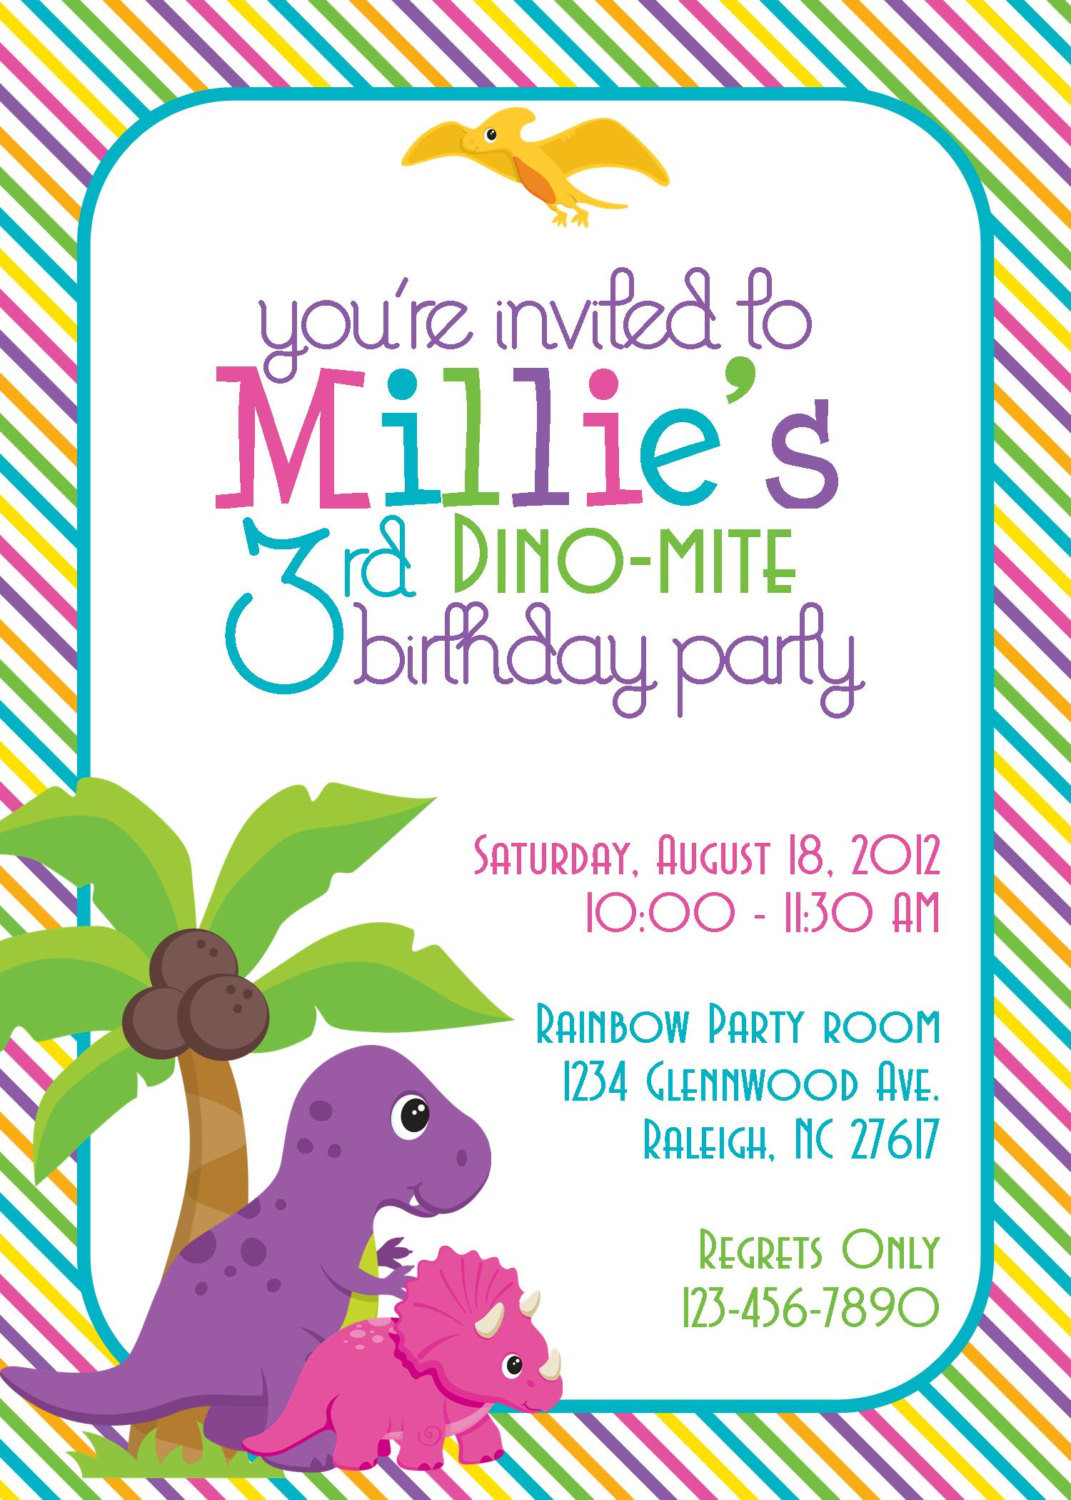 Dinosaur Birthday Party Invitations
 Dino Mite Dinosaur Birthday Party 5x7 Invitation by